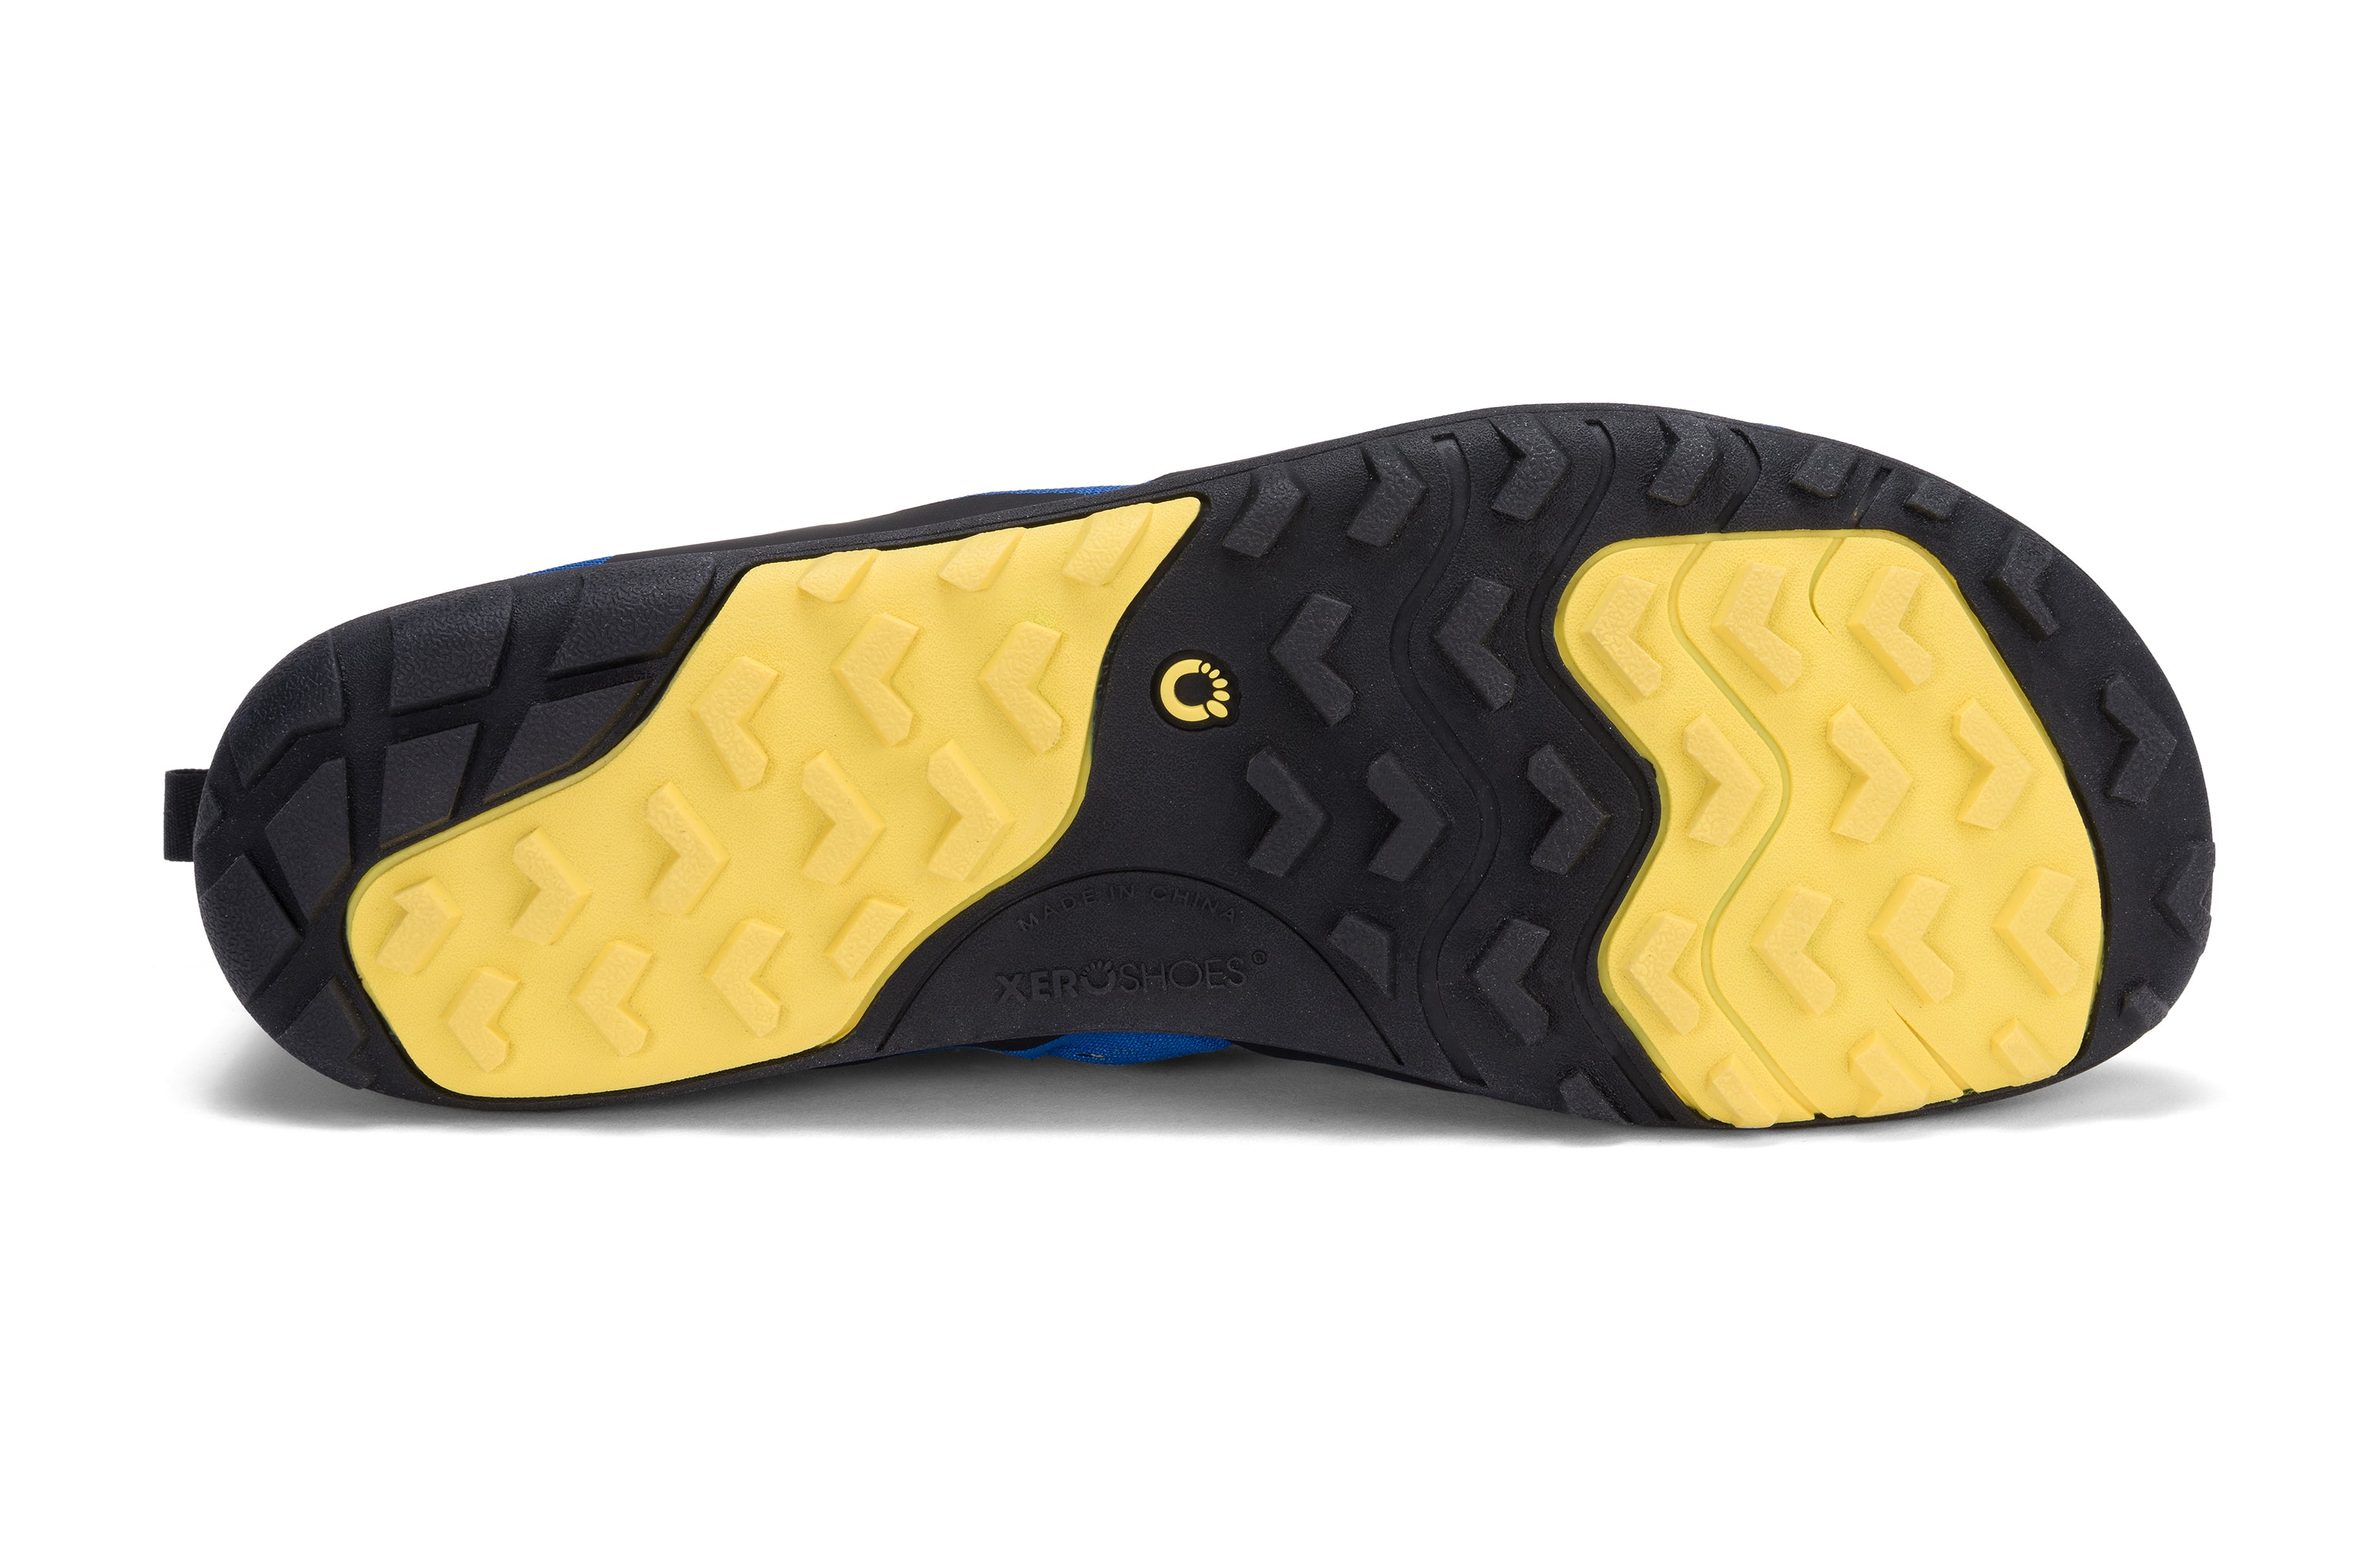 Xero Shoes Aqua X Sport barfods vand træningssko til mænd i farven blue / yellow, saal